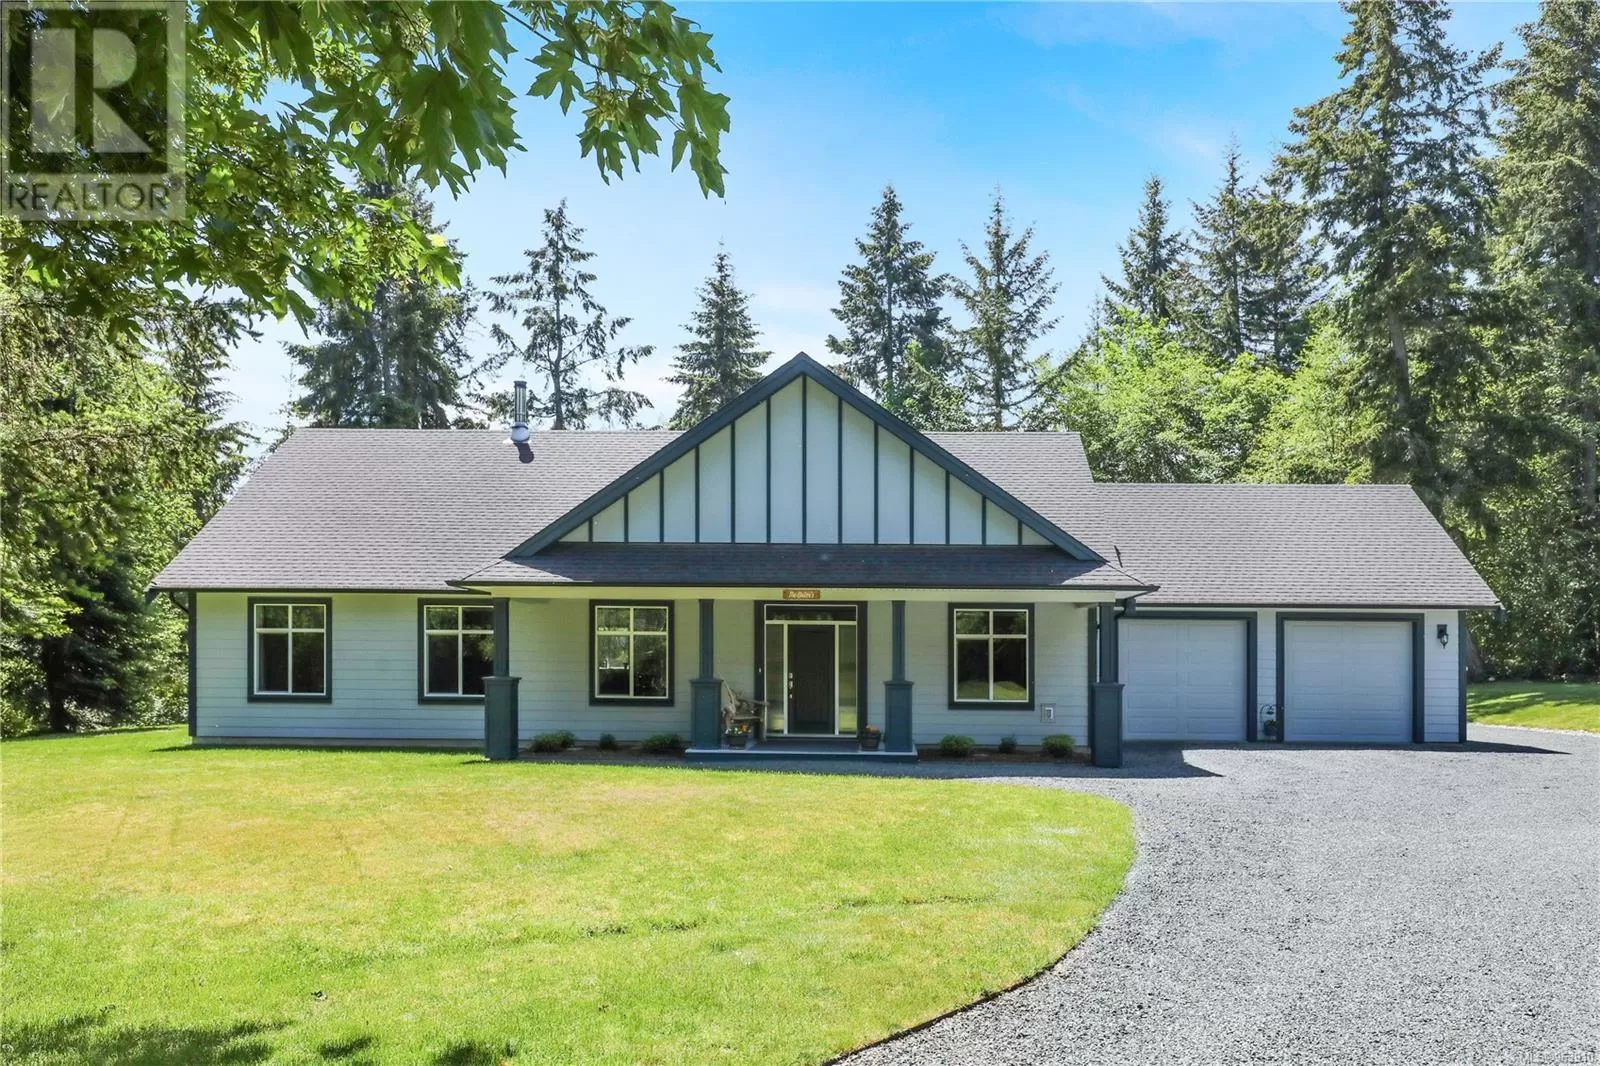 House for rent: 620 Elk Trail, Parksville, British Columbia V9P 2B1